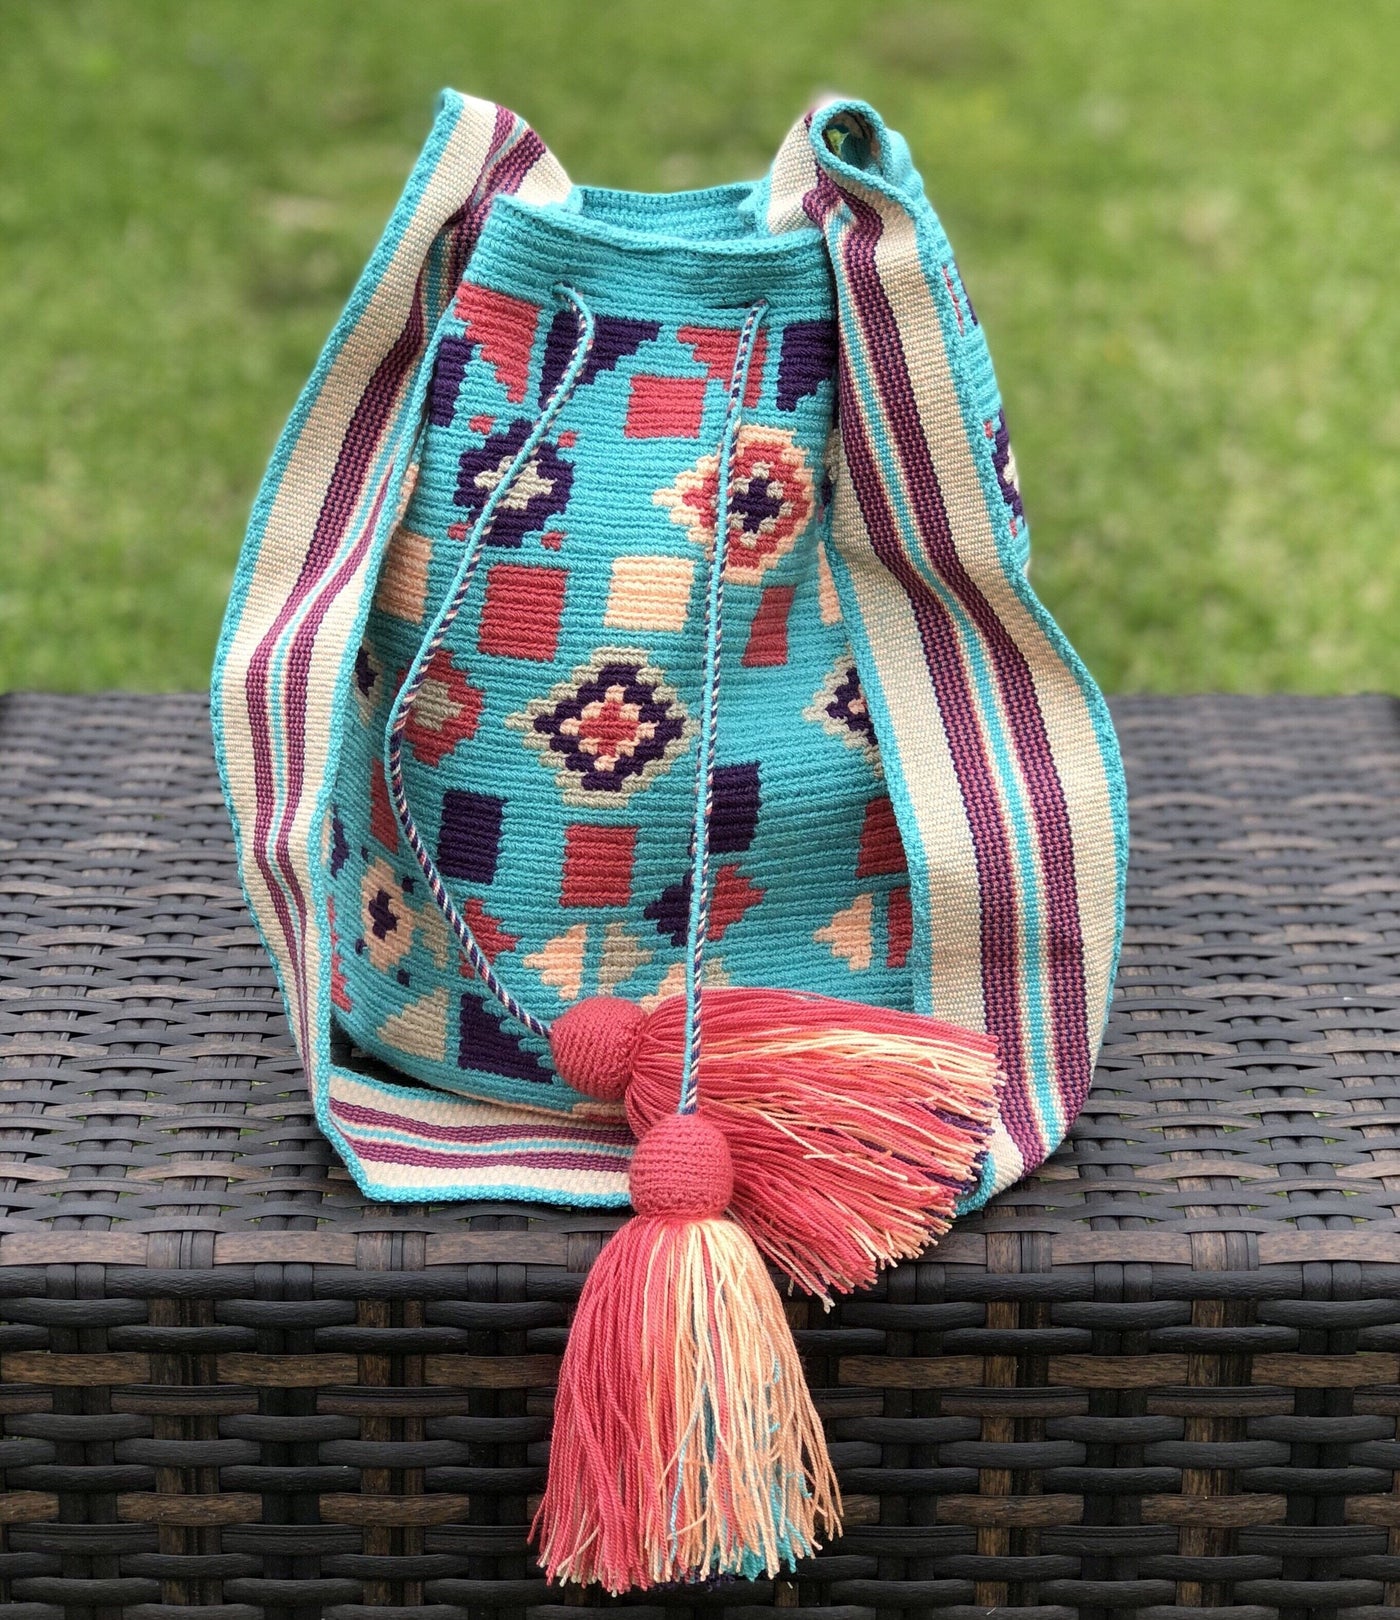 Boho-chic crochet bag